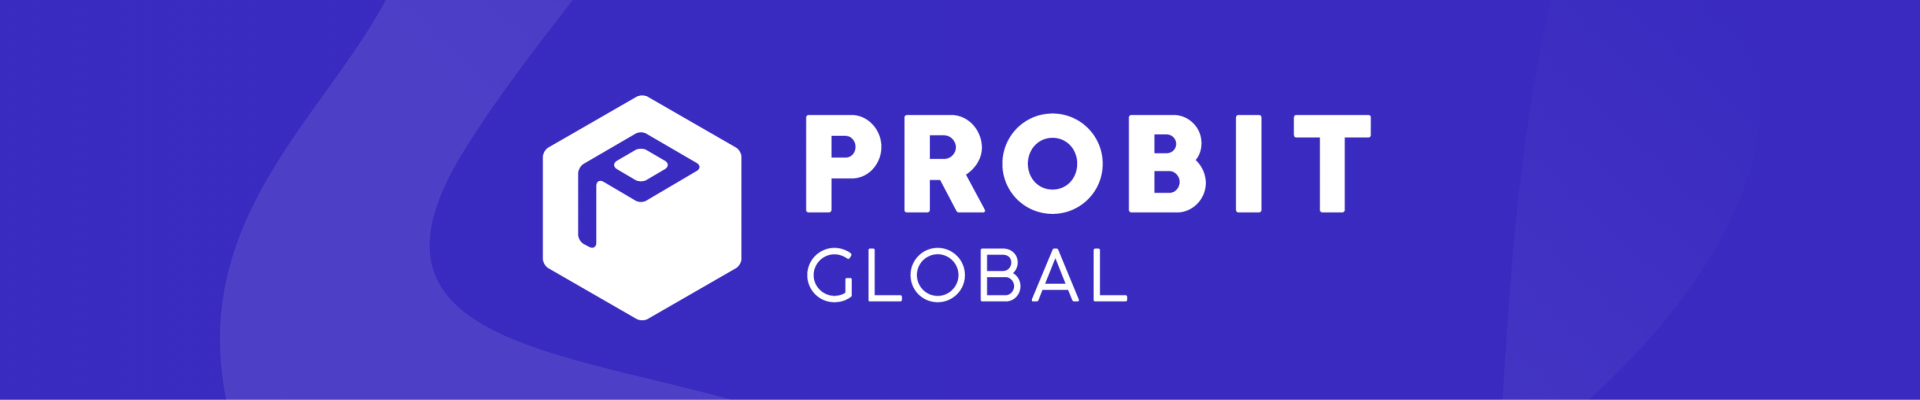 Probit Crypto Exchange - Guardarian Probit Partnership